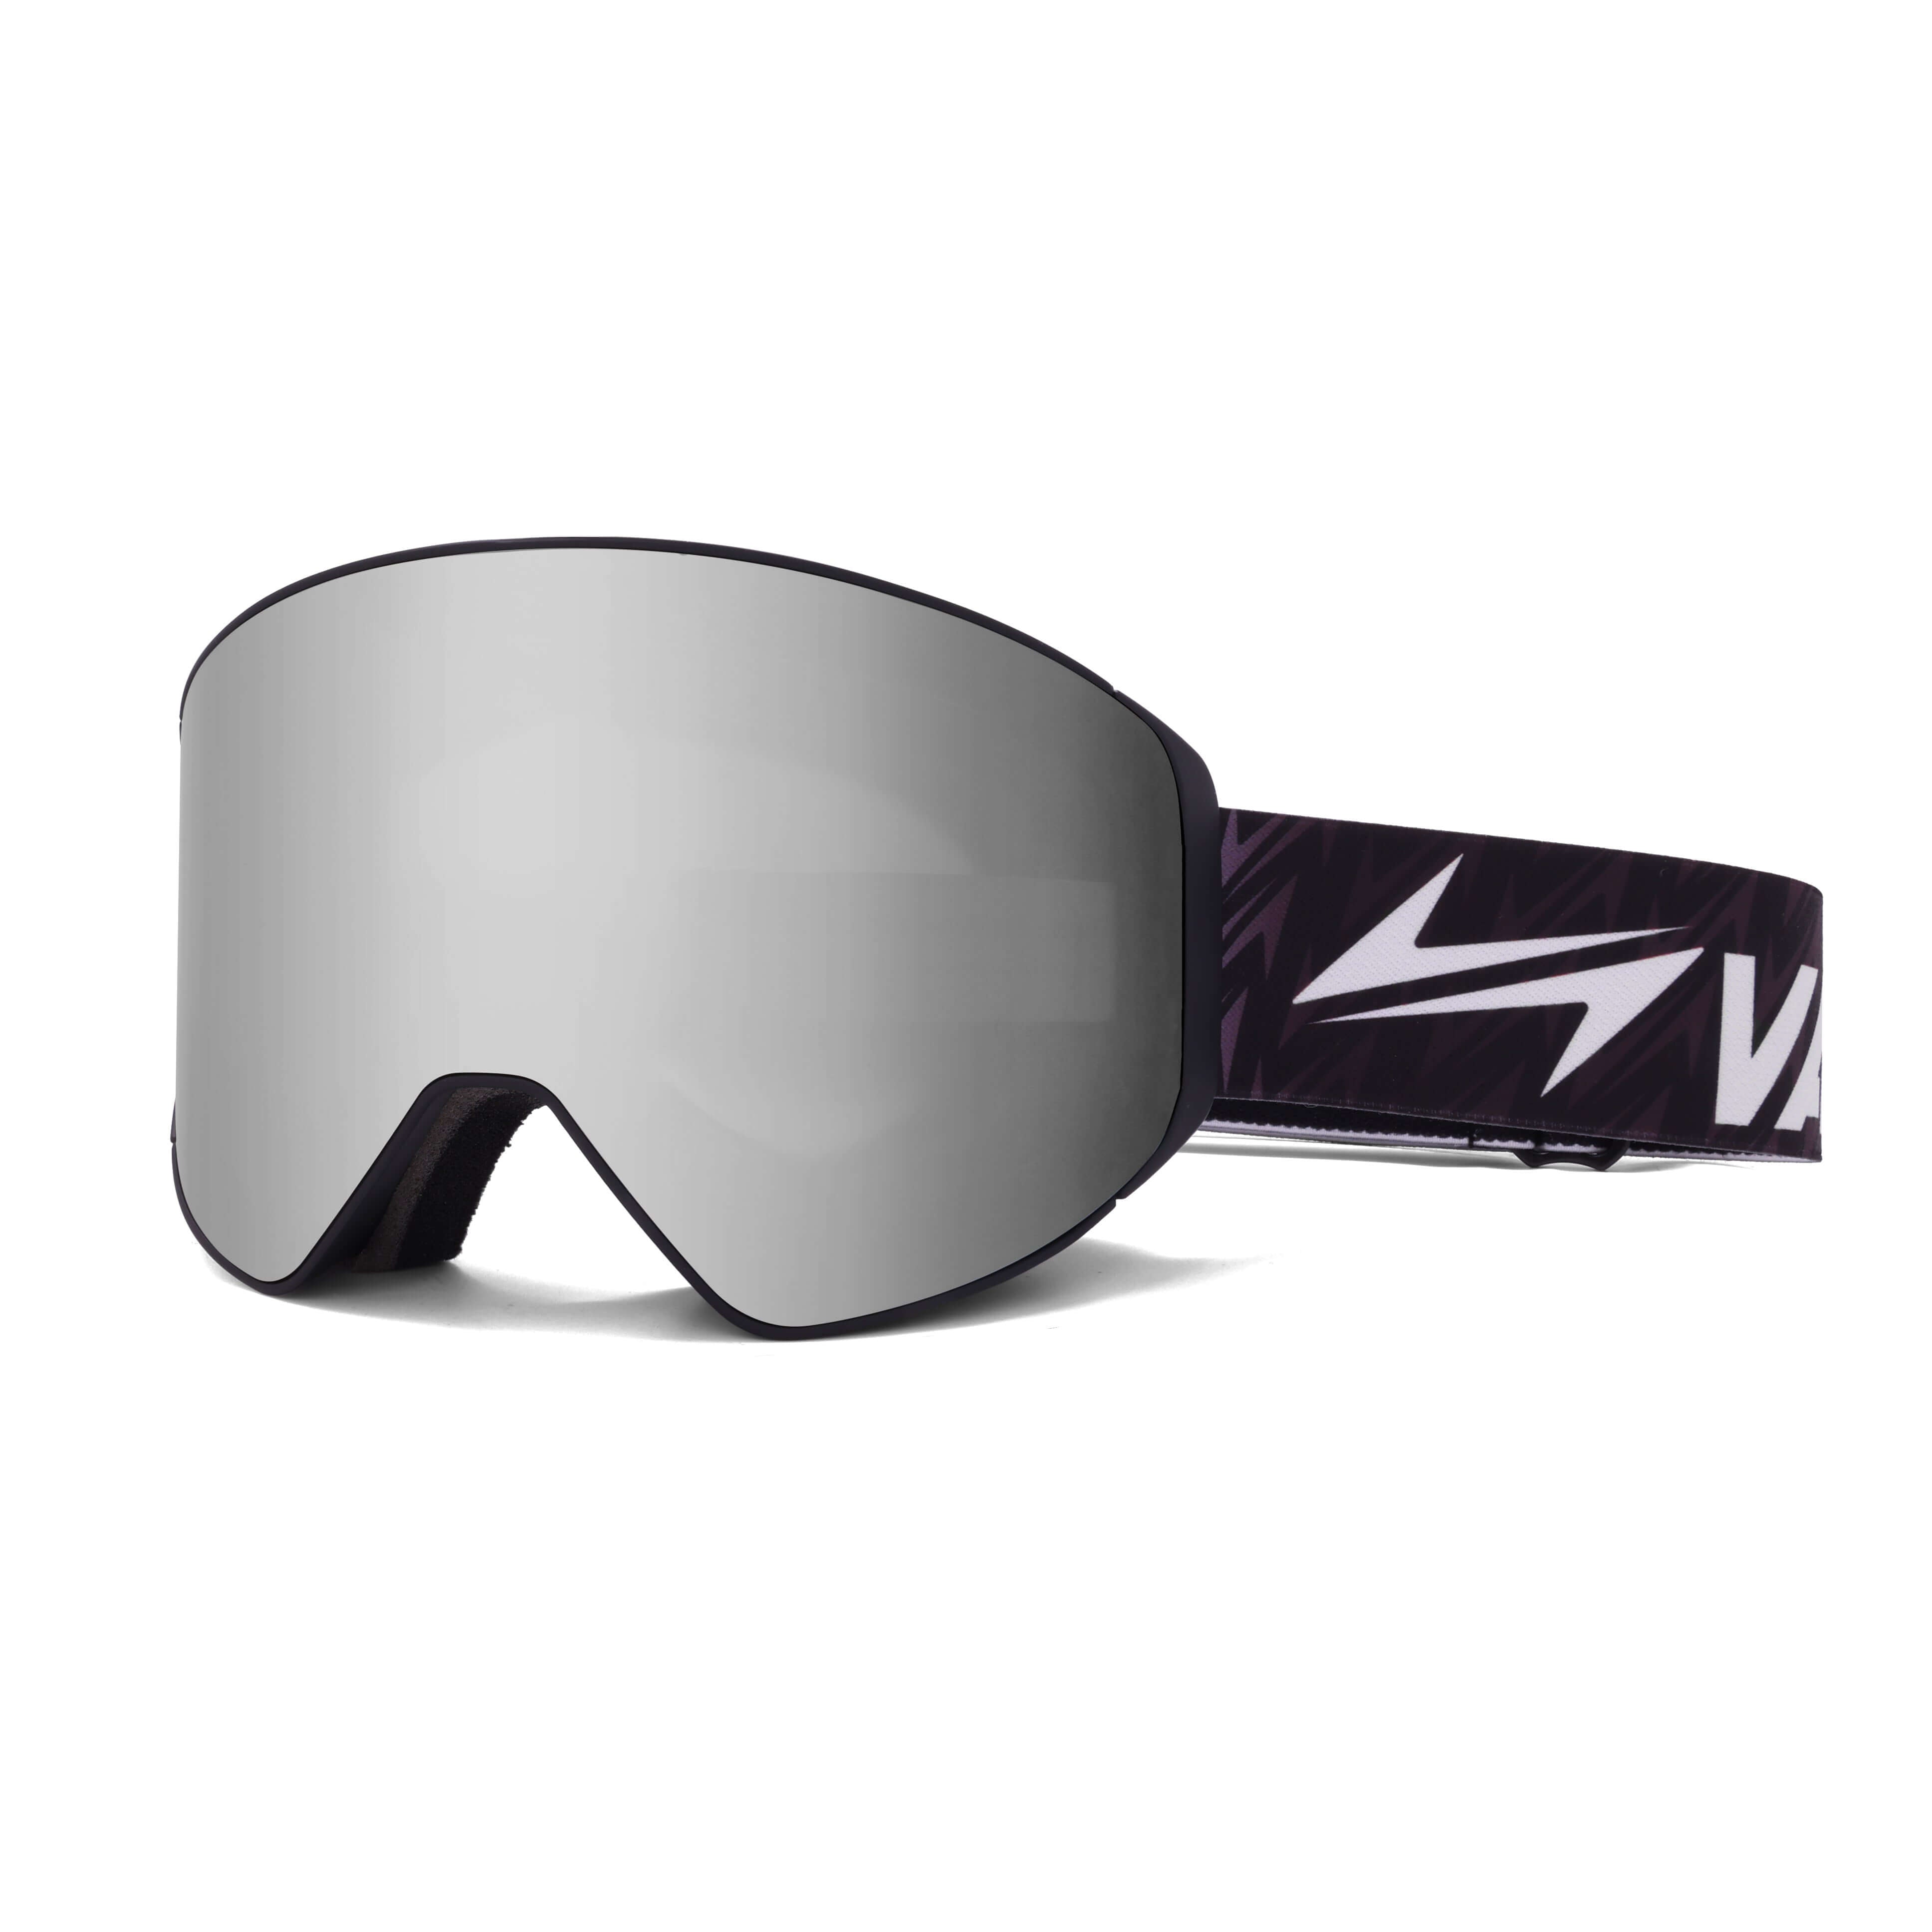 All VAIN ski goggles collection